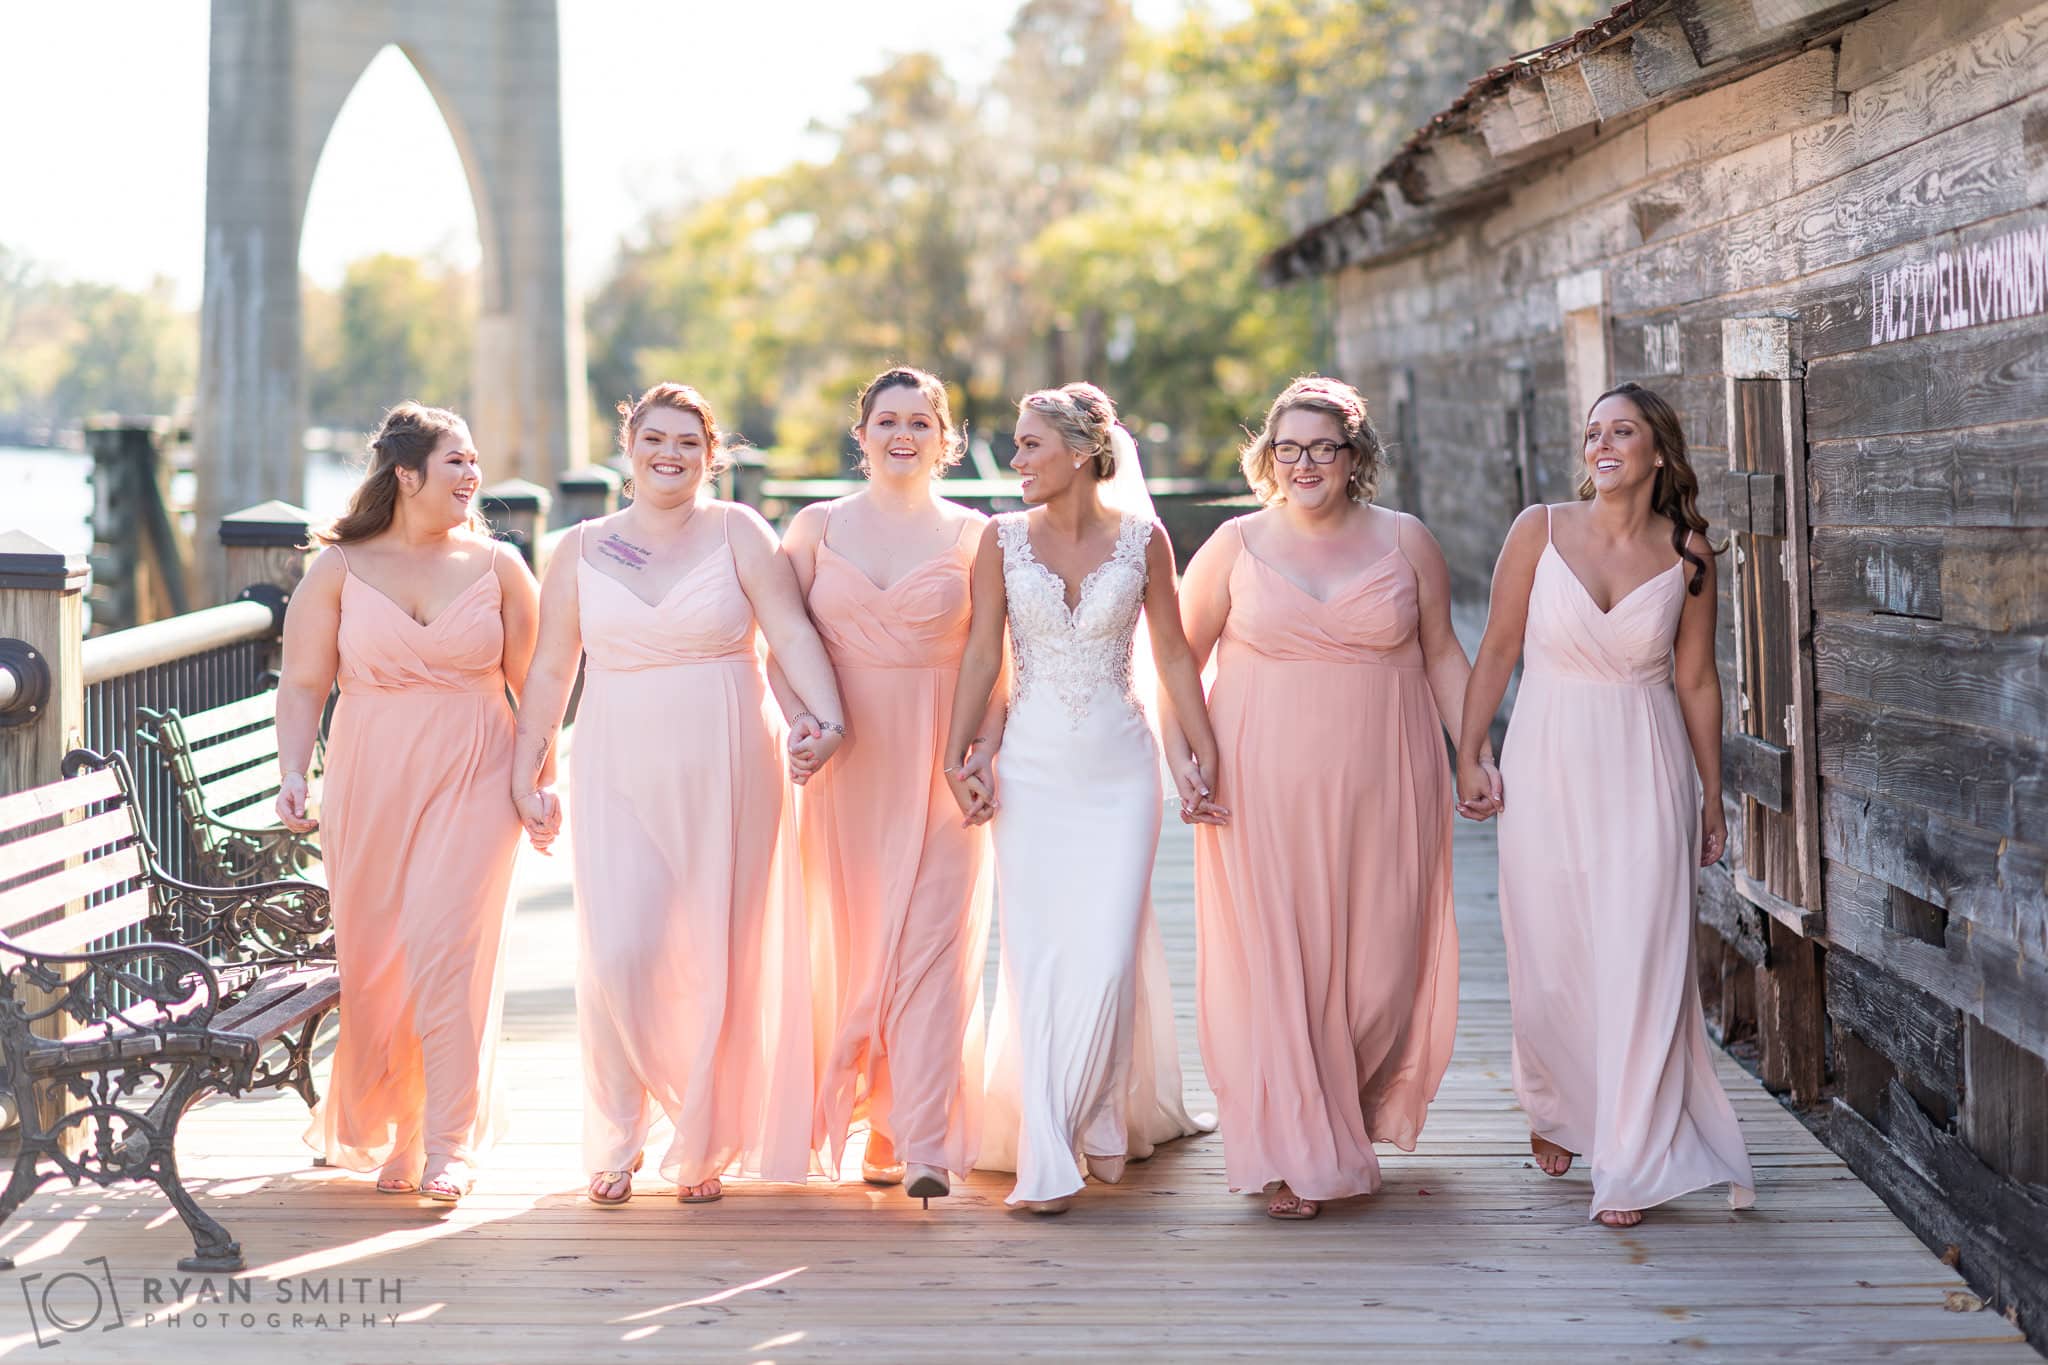 Bridesmaids holding hands walking down the boardwalk - Conway River Walk